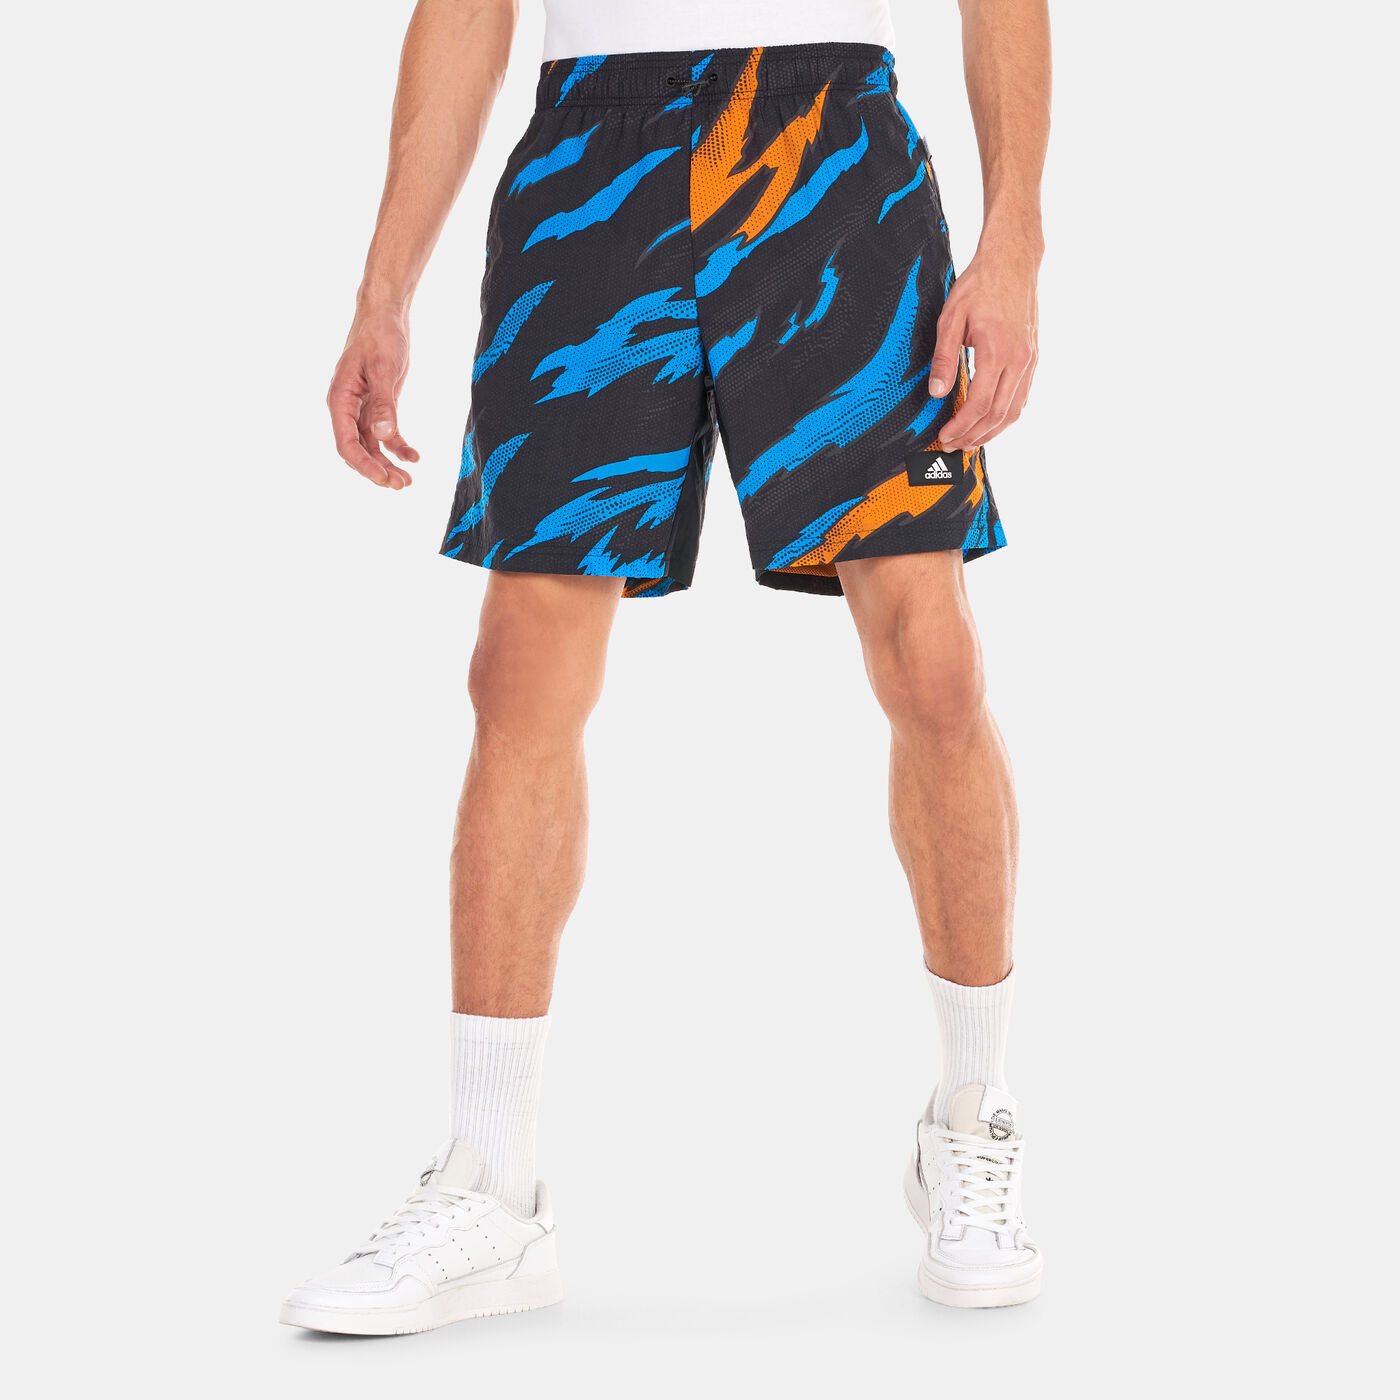 Men's TRVL Tiger Camo Shorts